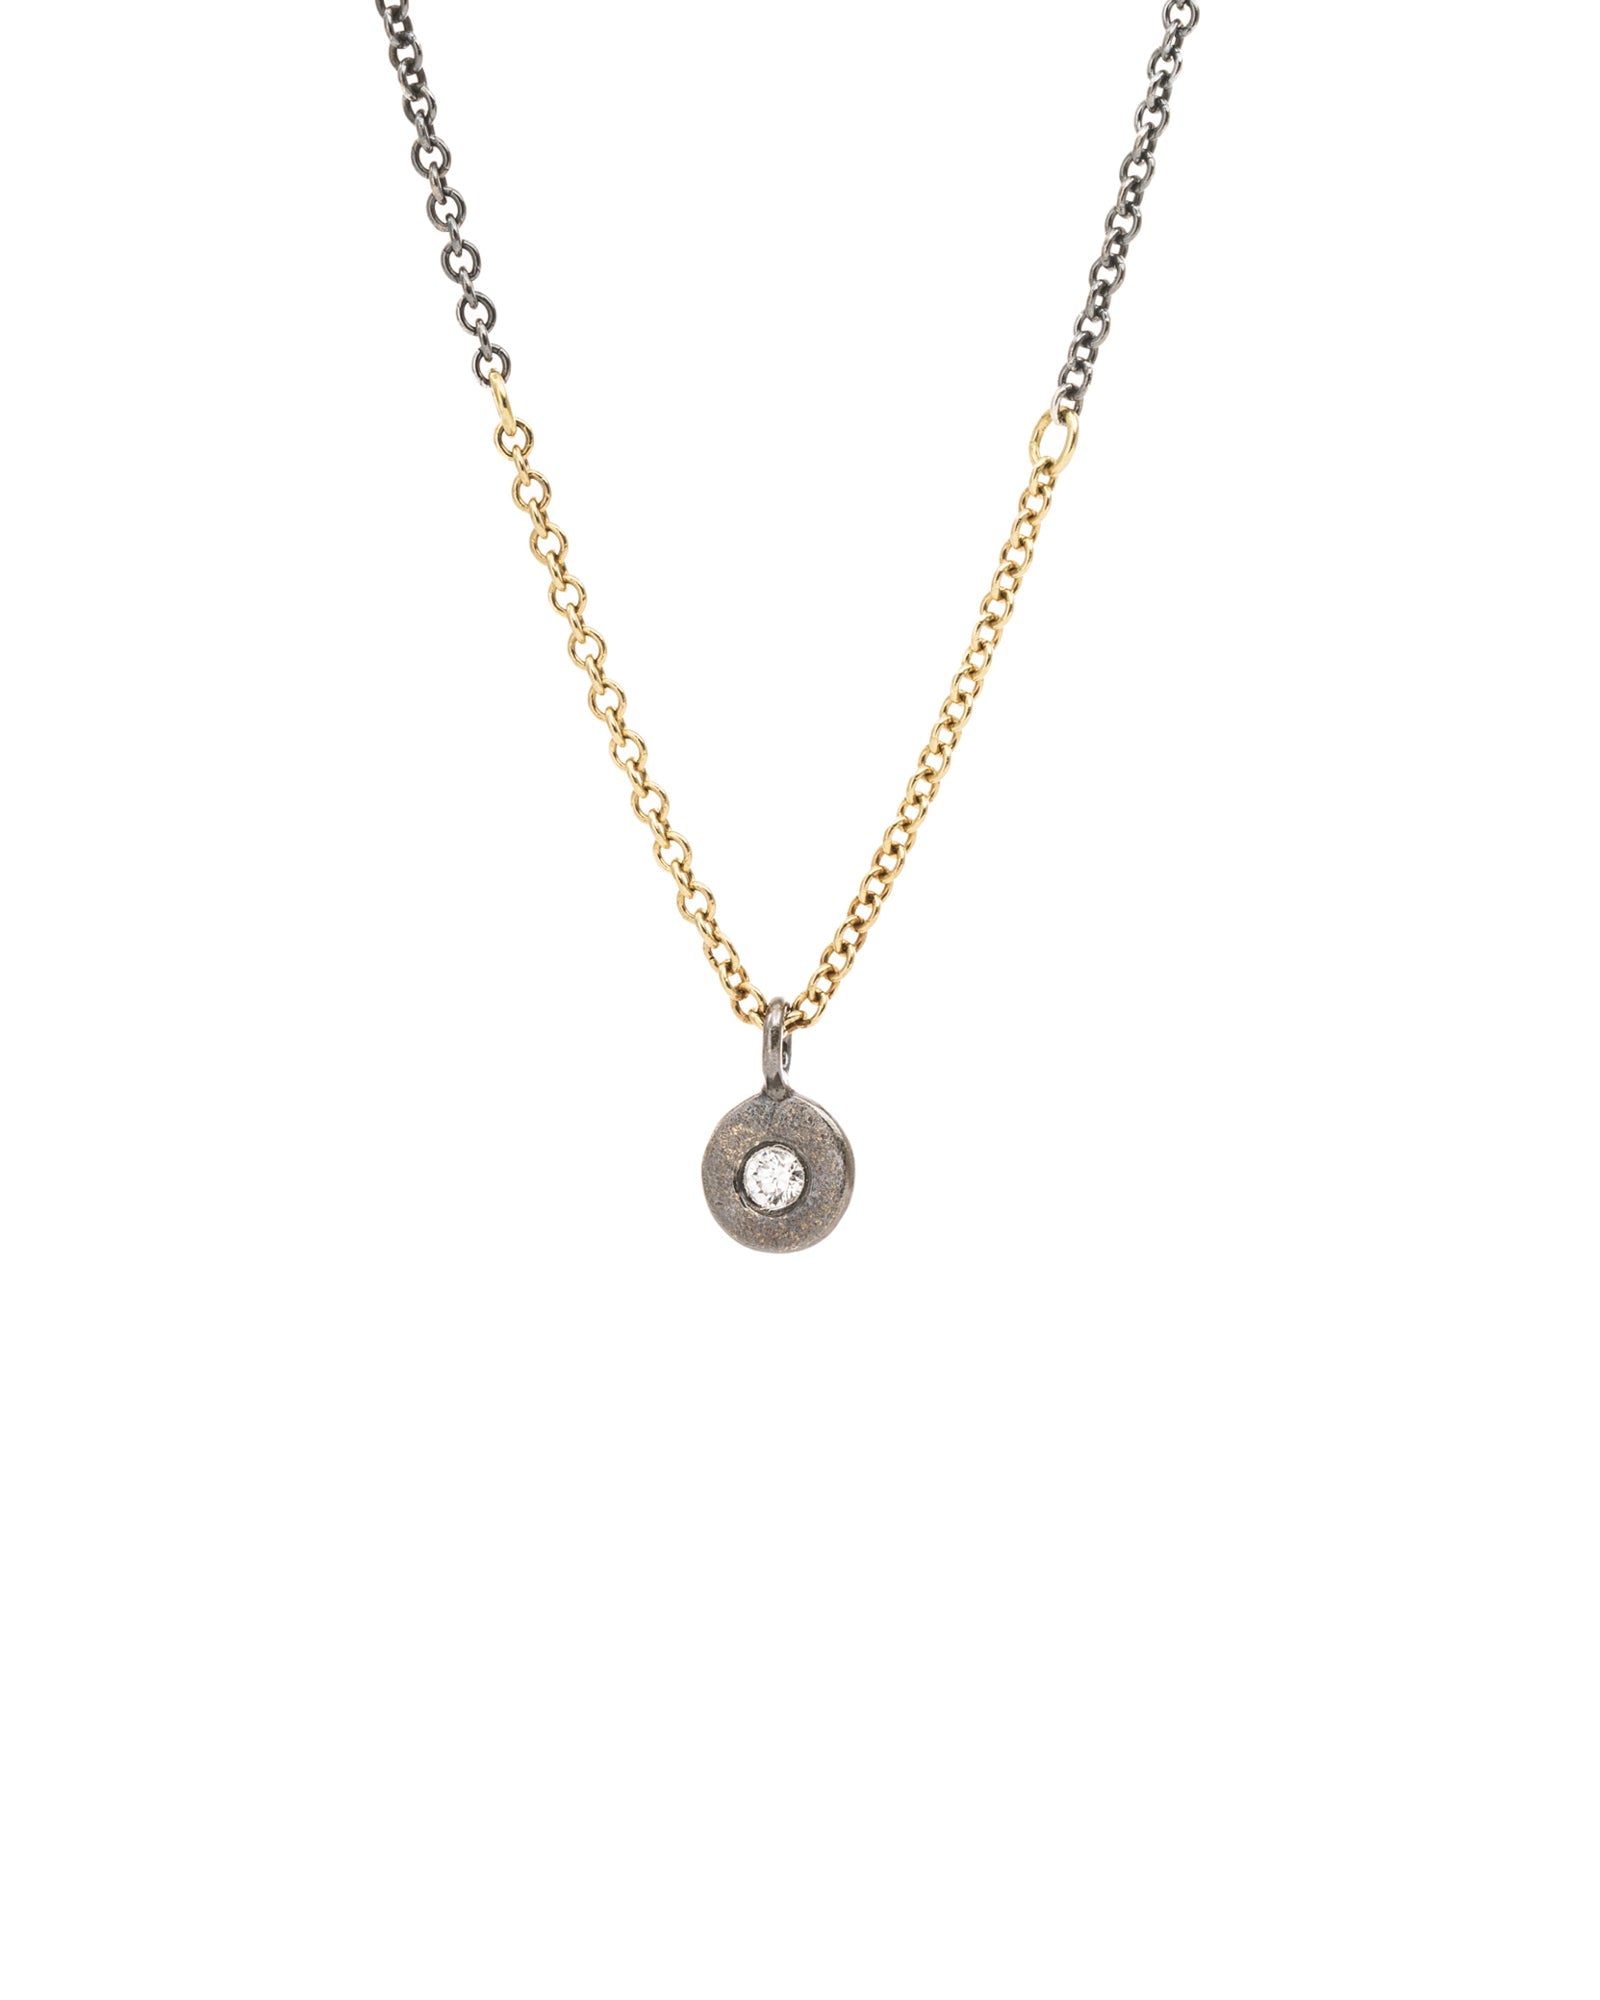 Pebble Necklace - Oxidized Silver